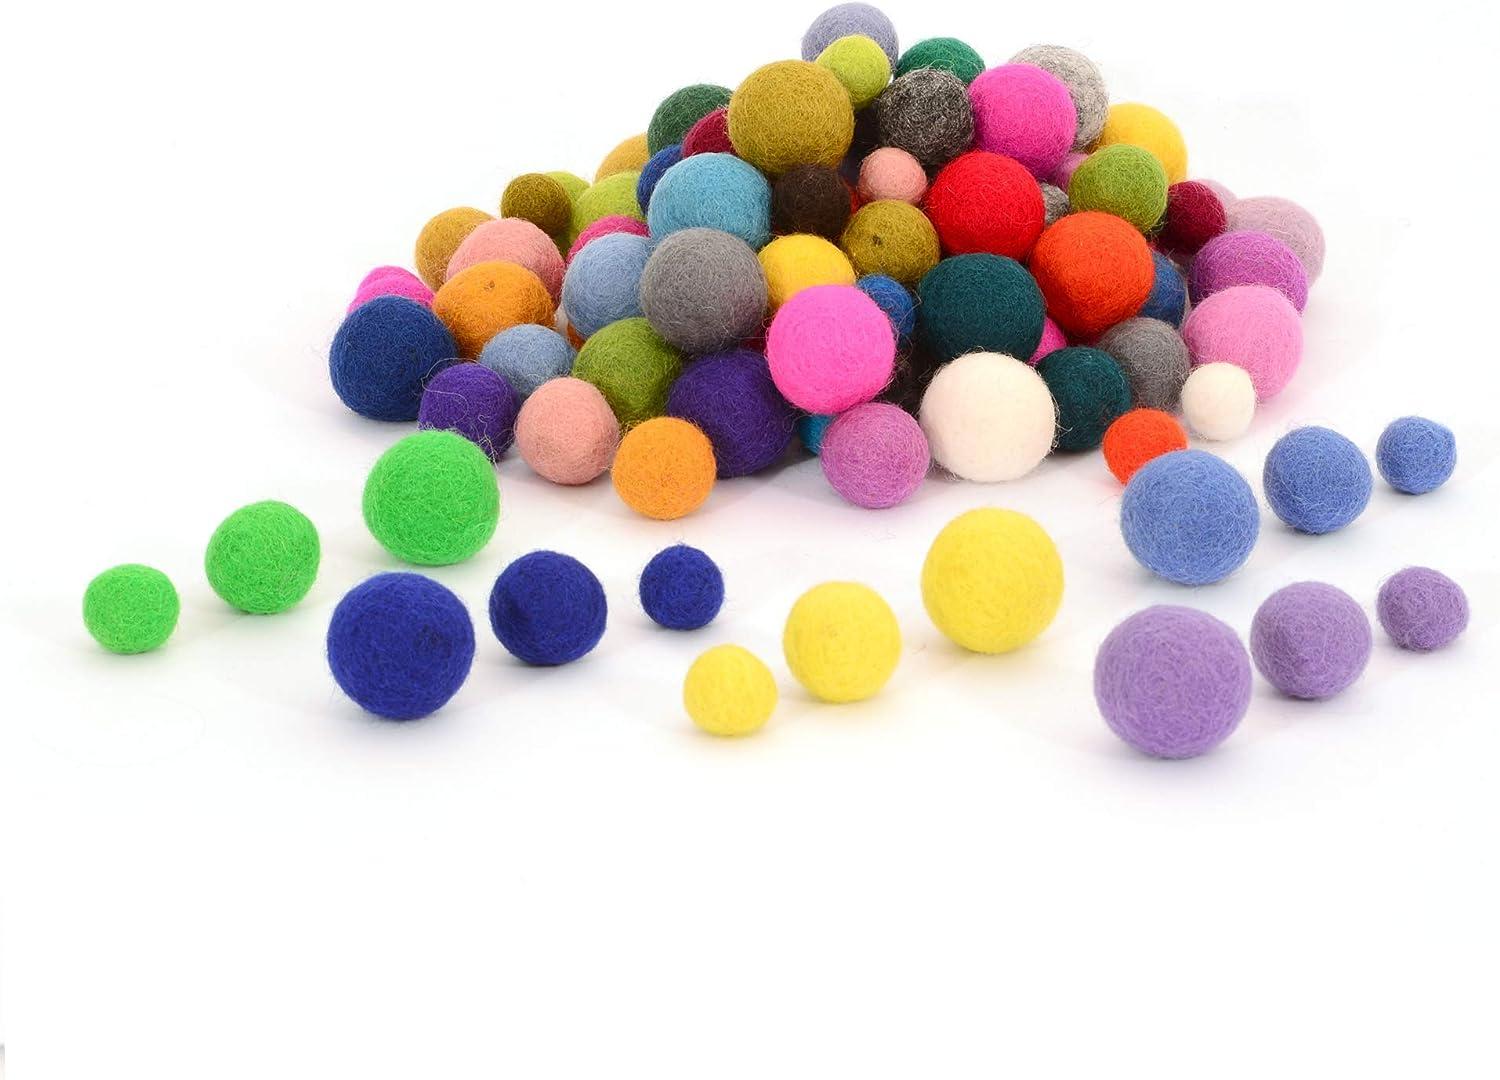 Qililandiy 50pc Colorful 2cm One Felt Pom Poms Wool Felt Balls Handmade Felted 10 Color Bulk Small Puff for Felting and Garland